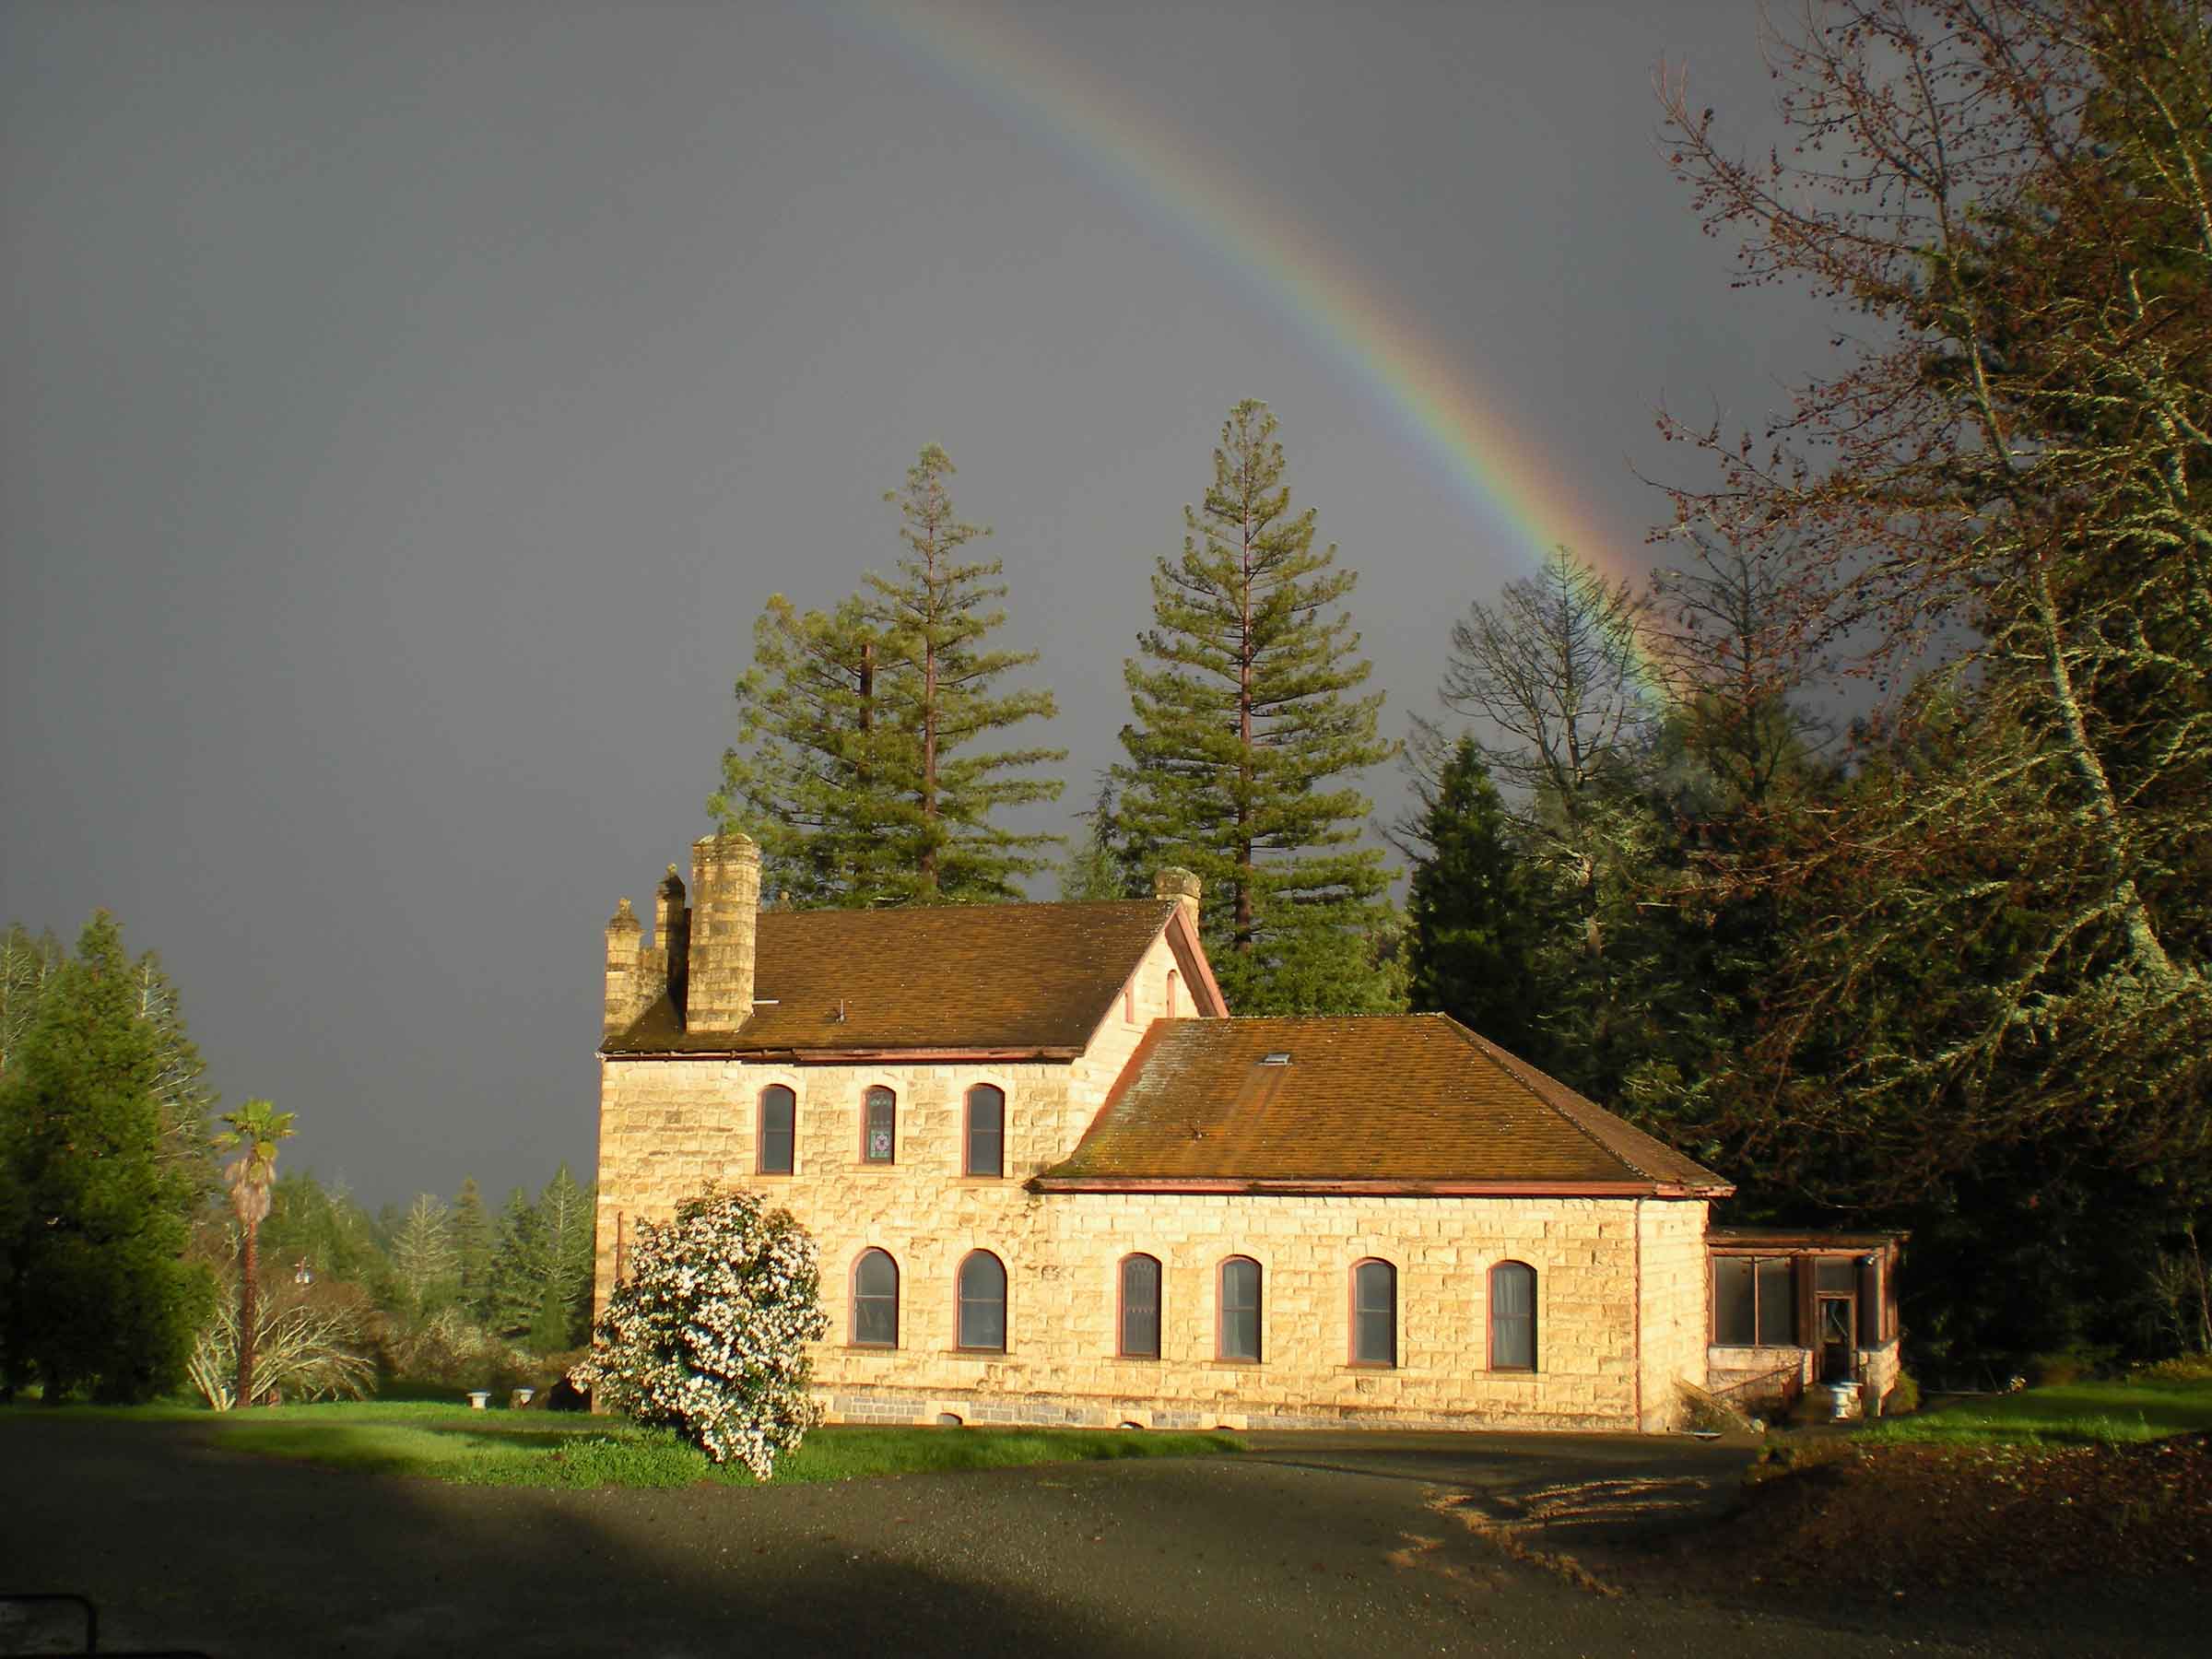 a rainbow over the Wallis Estate chateau against a gray sky